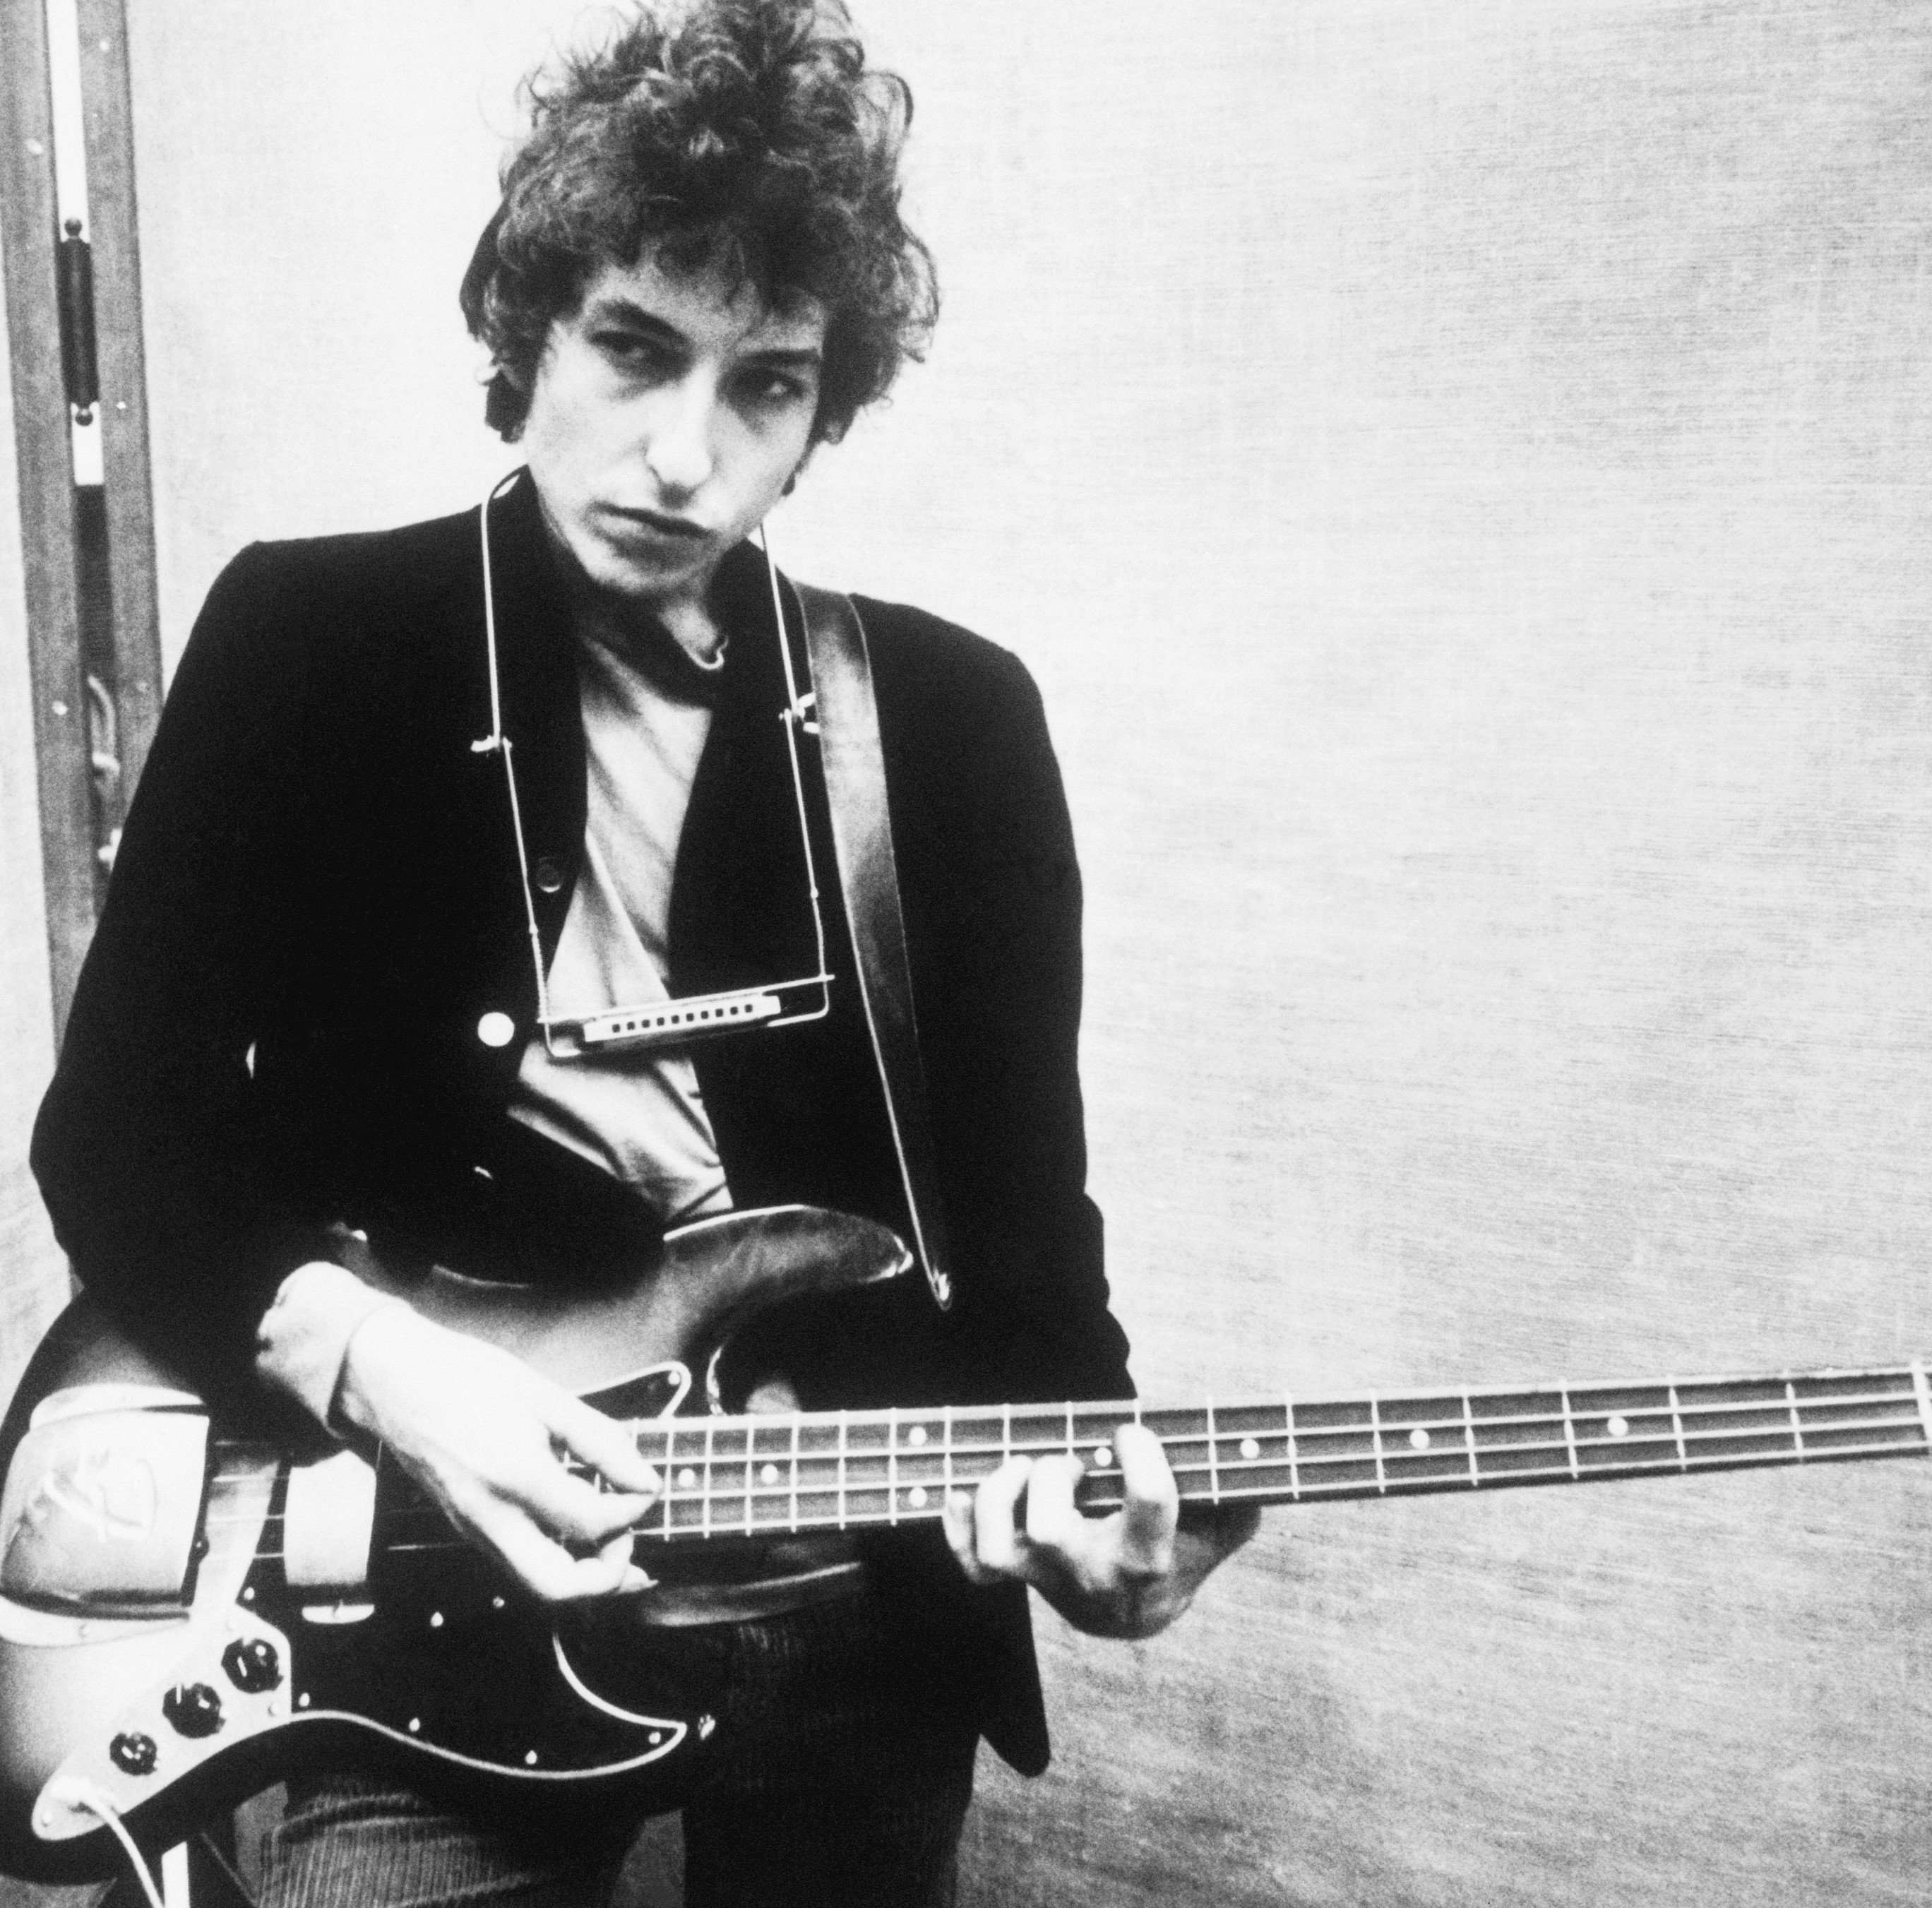 "Lay Lady Lay" era Bob Dylan with a guitar